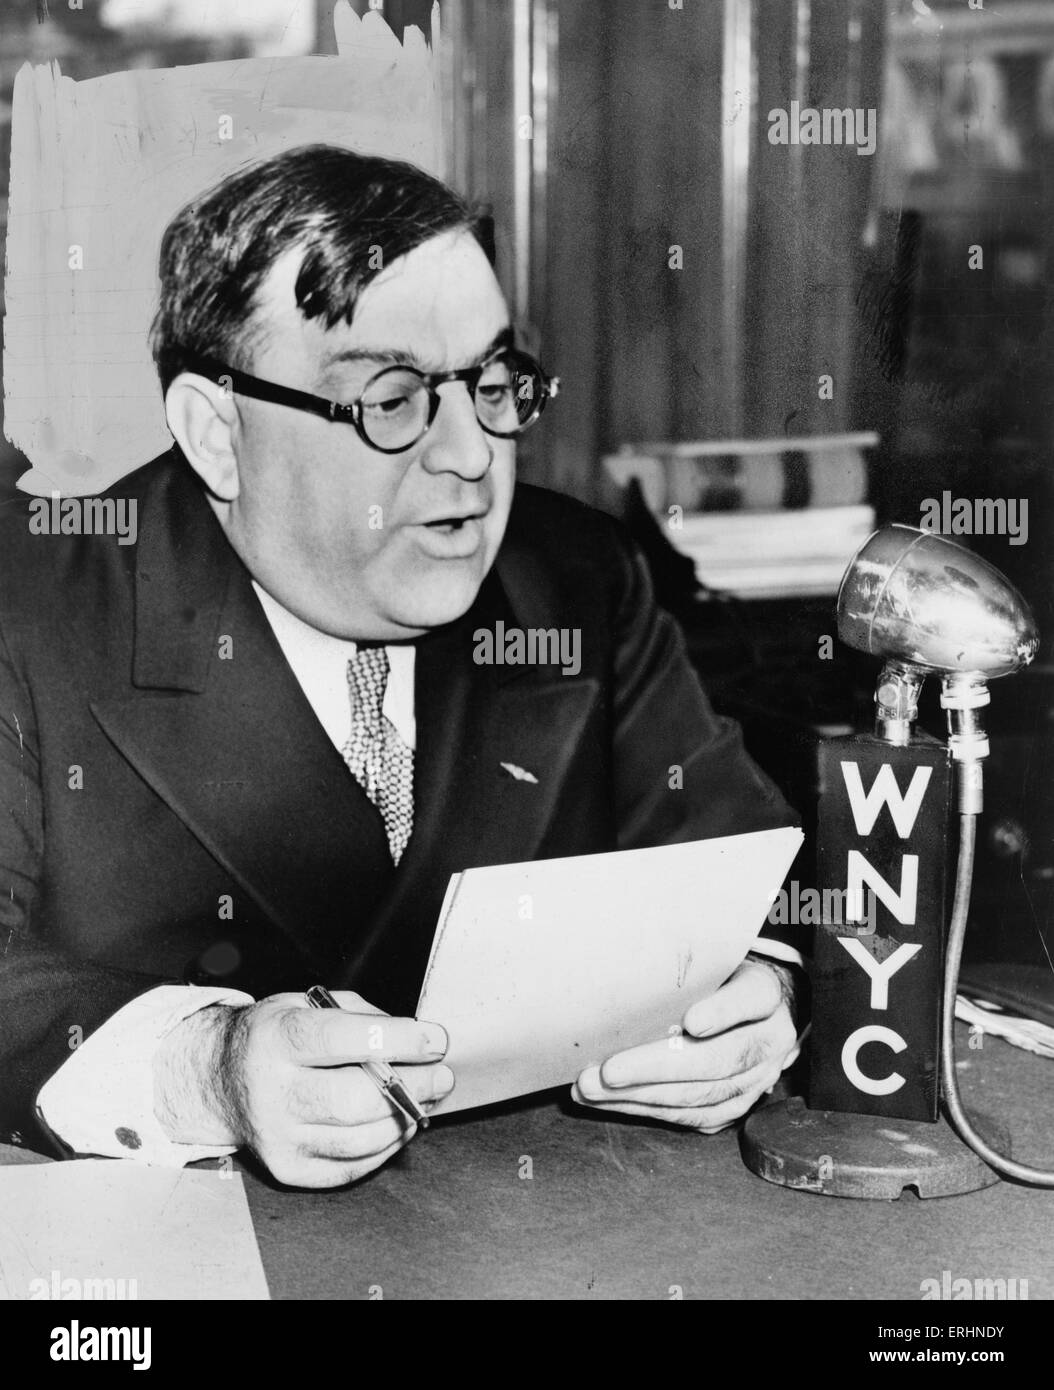 FIORELLO H. LA GUARDIA (1882-1947) American politician as Mayor of New York making a radio broadcast on 23 March 1940. Photo Fred Palumbo Stock Photo